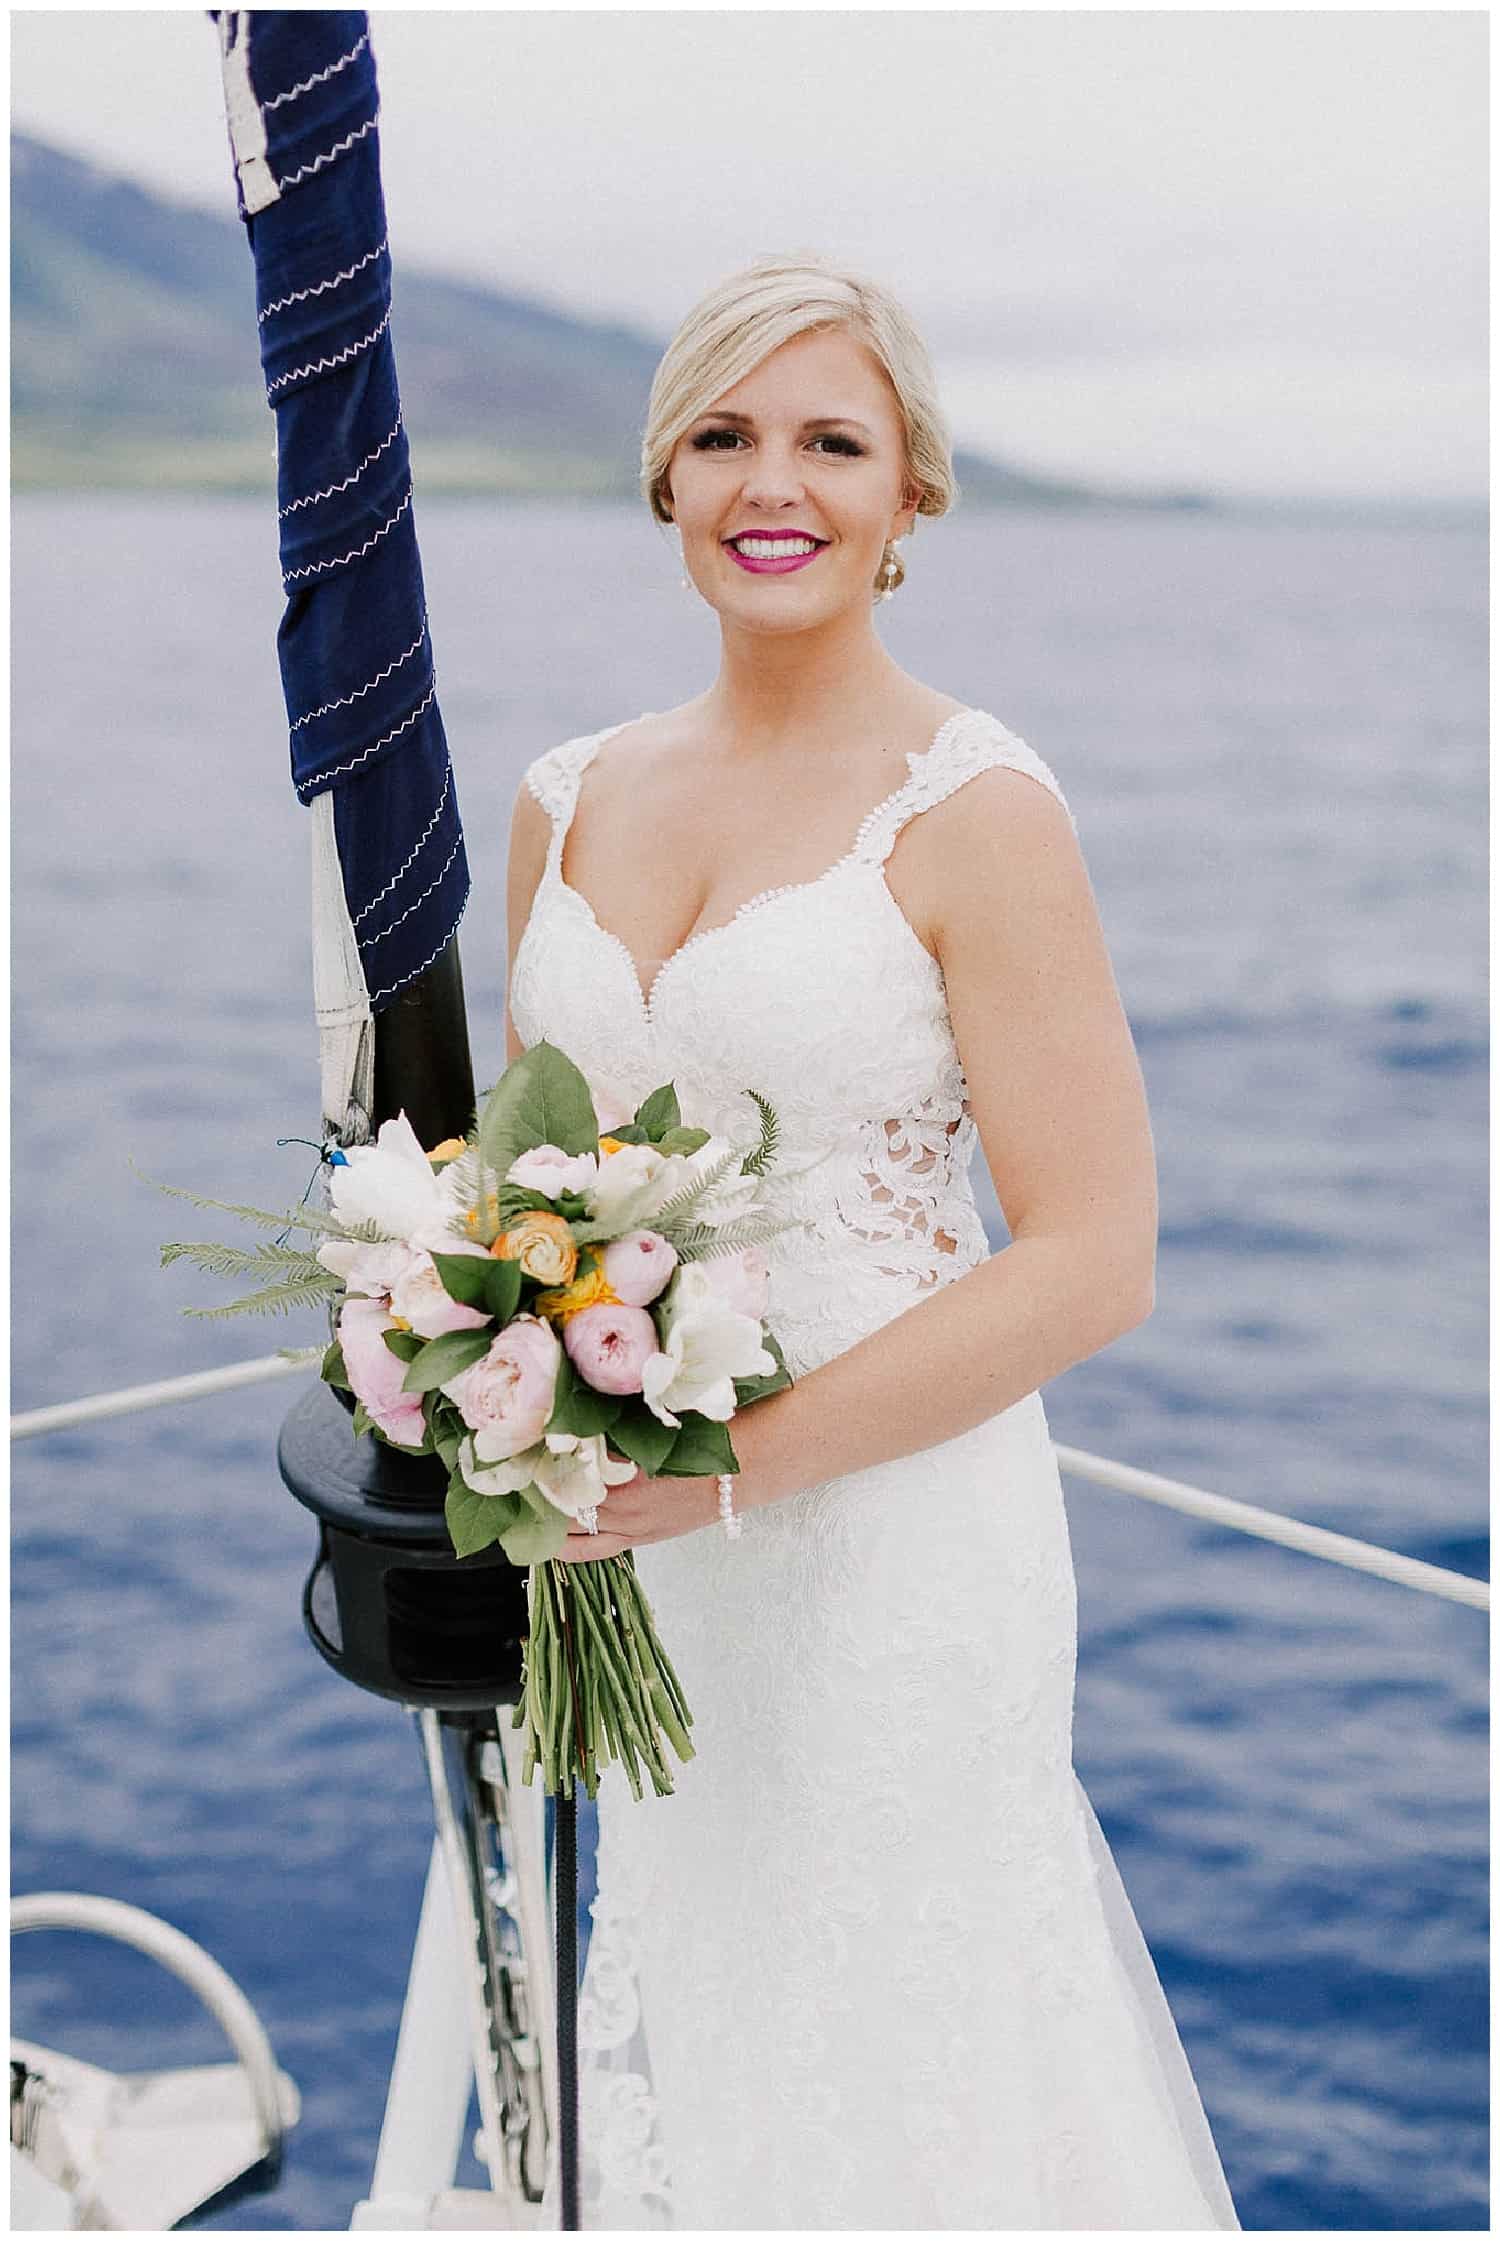 Sail Trilogy Maui wedding photos by Maui wedding photographer Luma Weddings